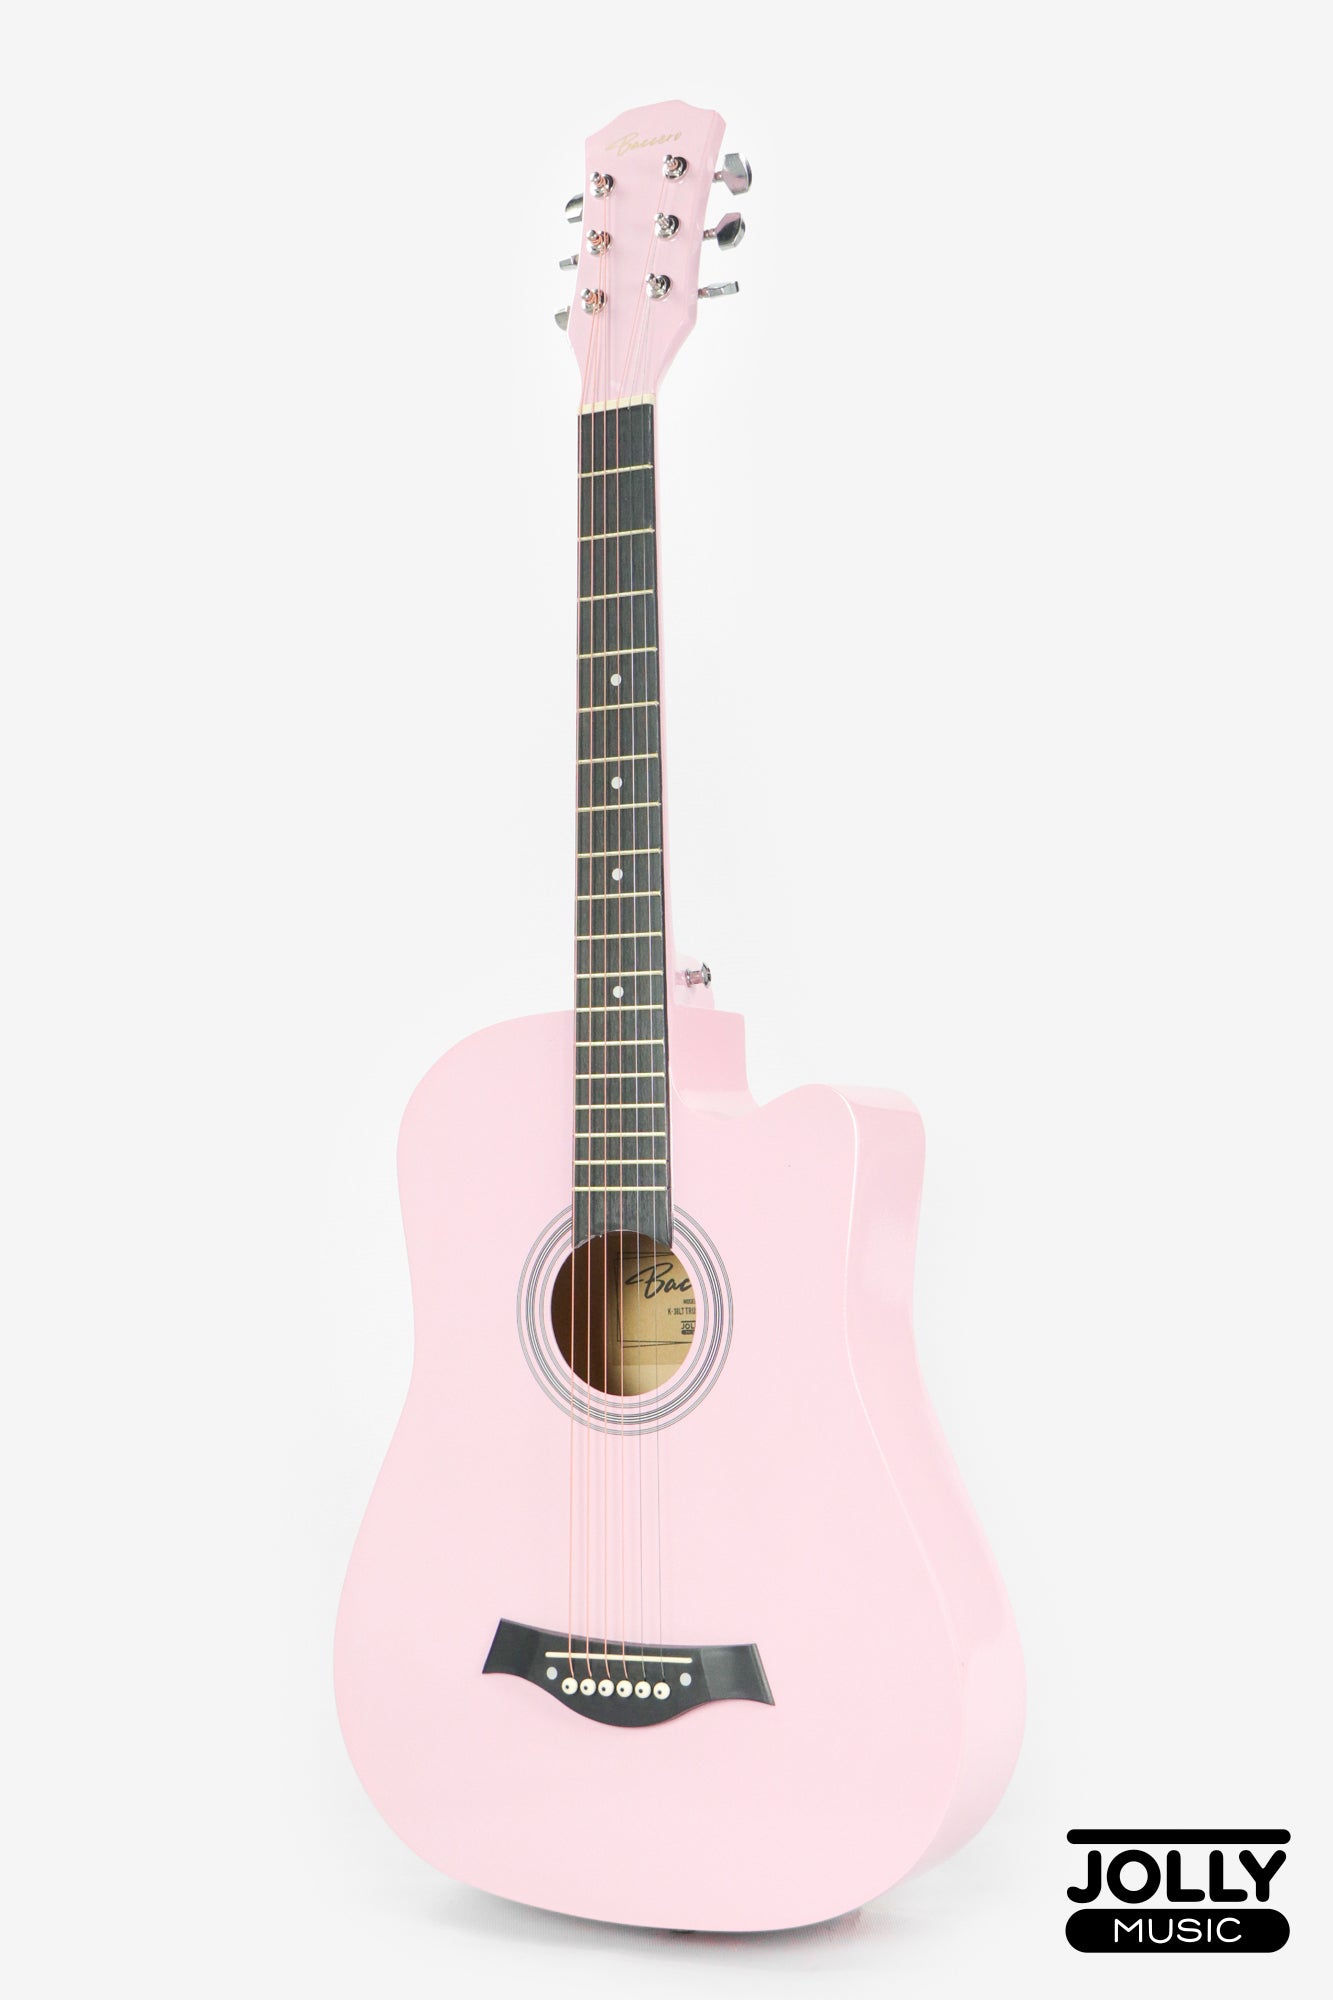 Baccero 38" Guitar K-38LT Truss Rod w/ Case, 3 Picks, Tuner, Capo - Pink